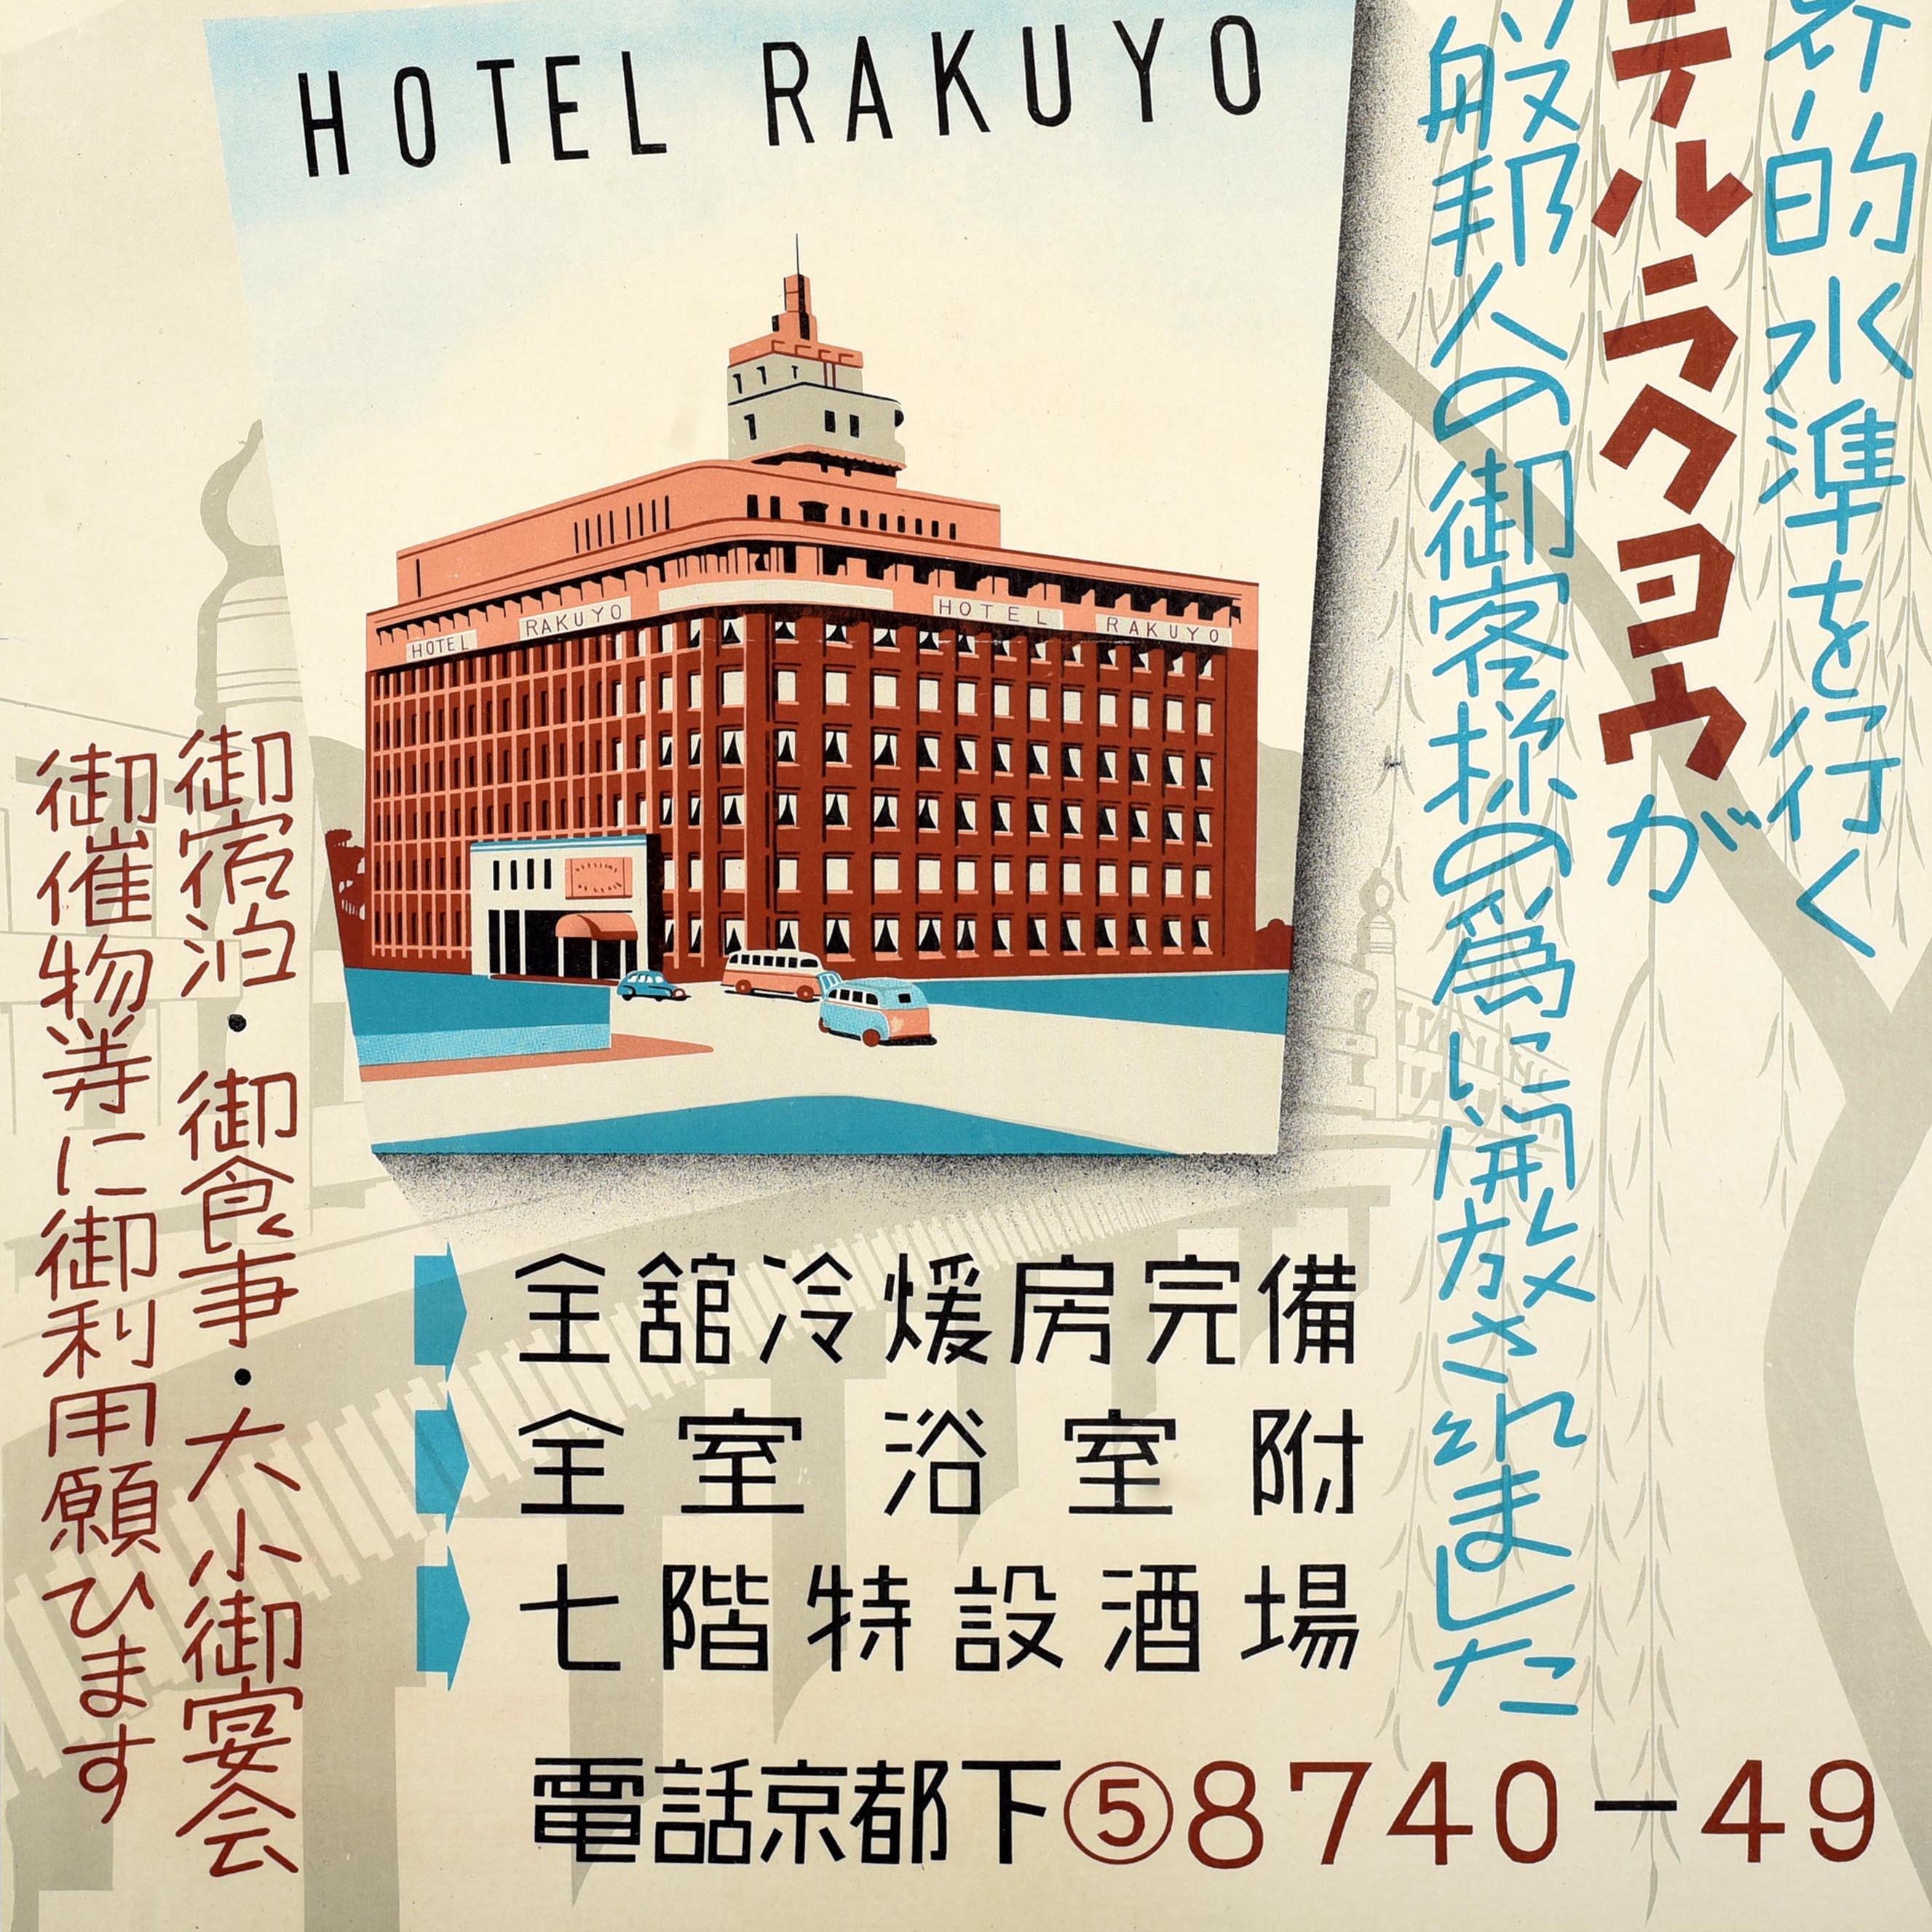 Affiche de voyage japonaise originale de l'hôtel Rakuyo, gare de Kyoto, Japon, Asie en vente 1